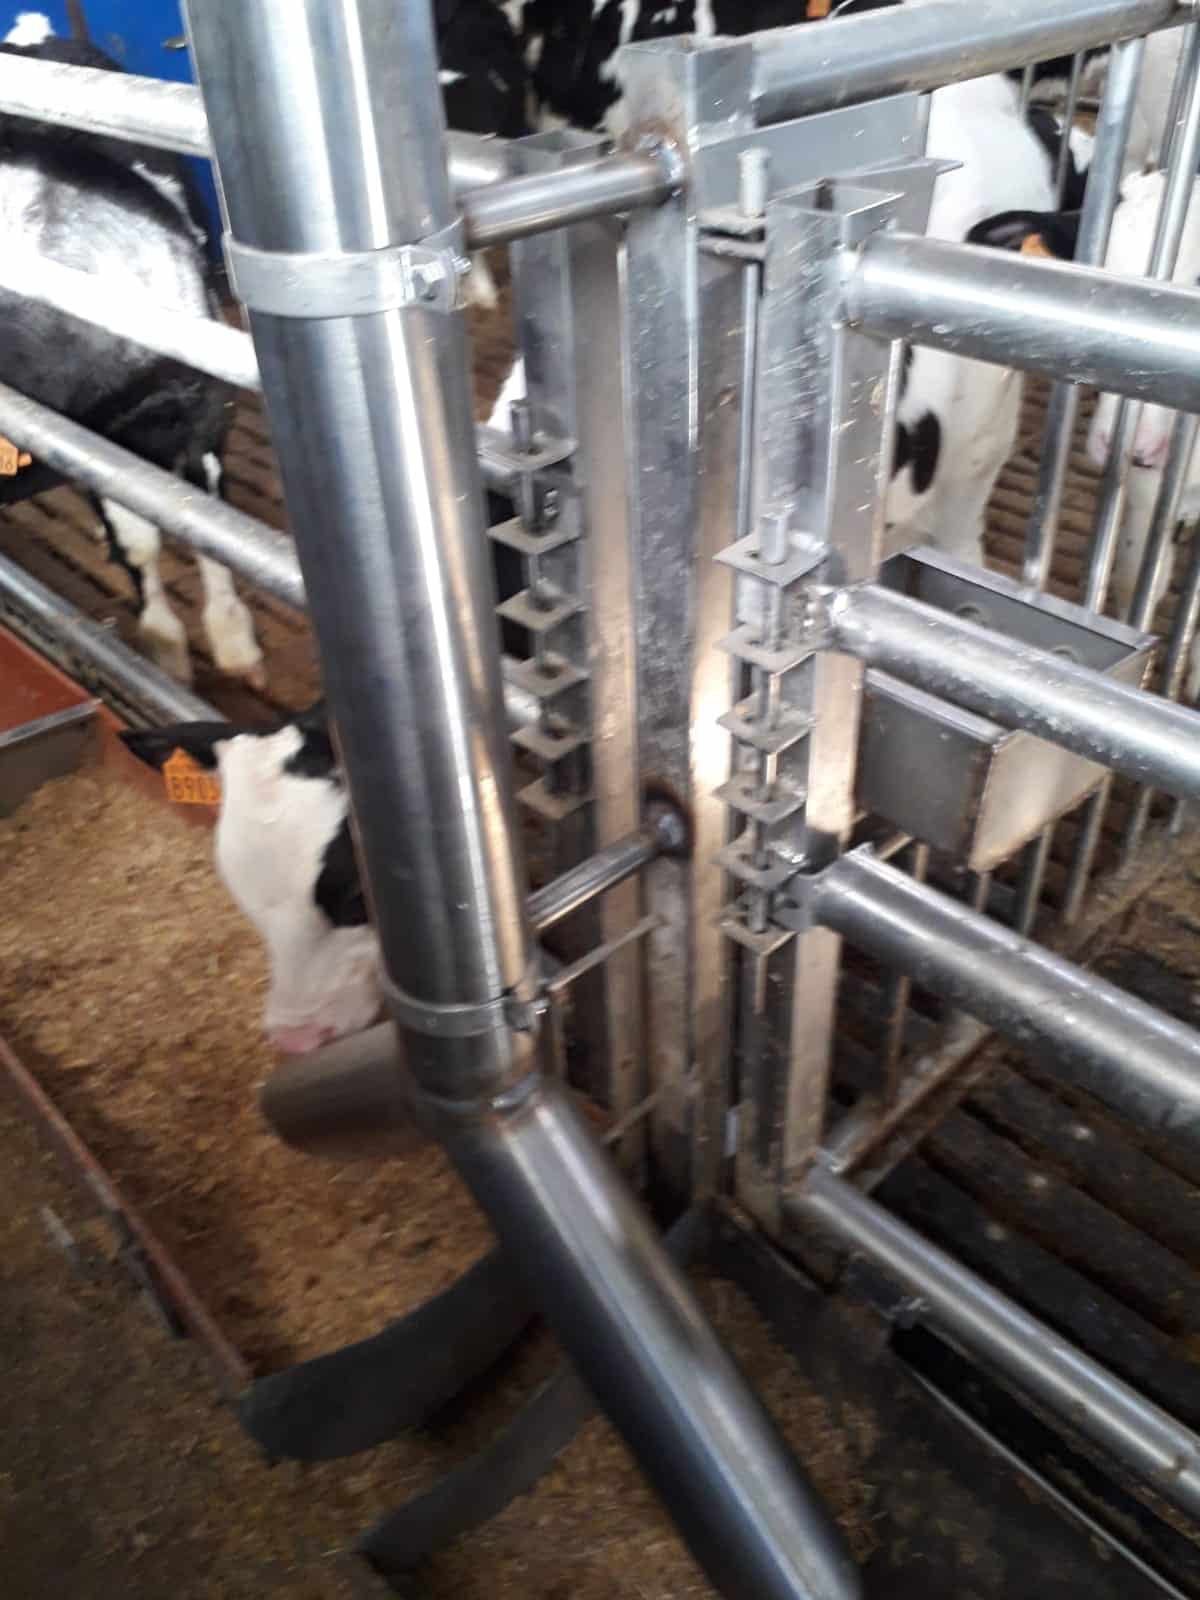 Impianto di mangime per vitelli di razza piemontese – Collari inox in due pezzi